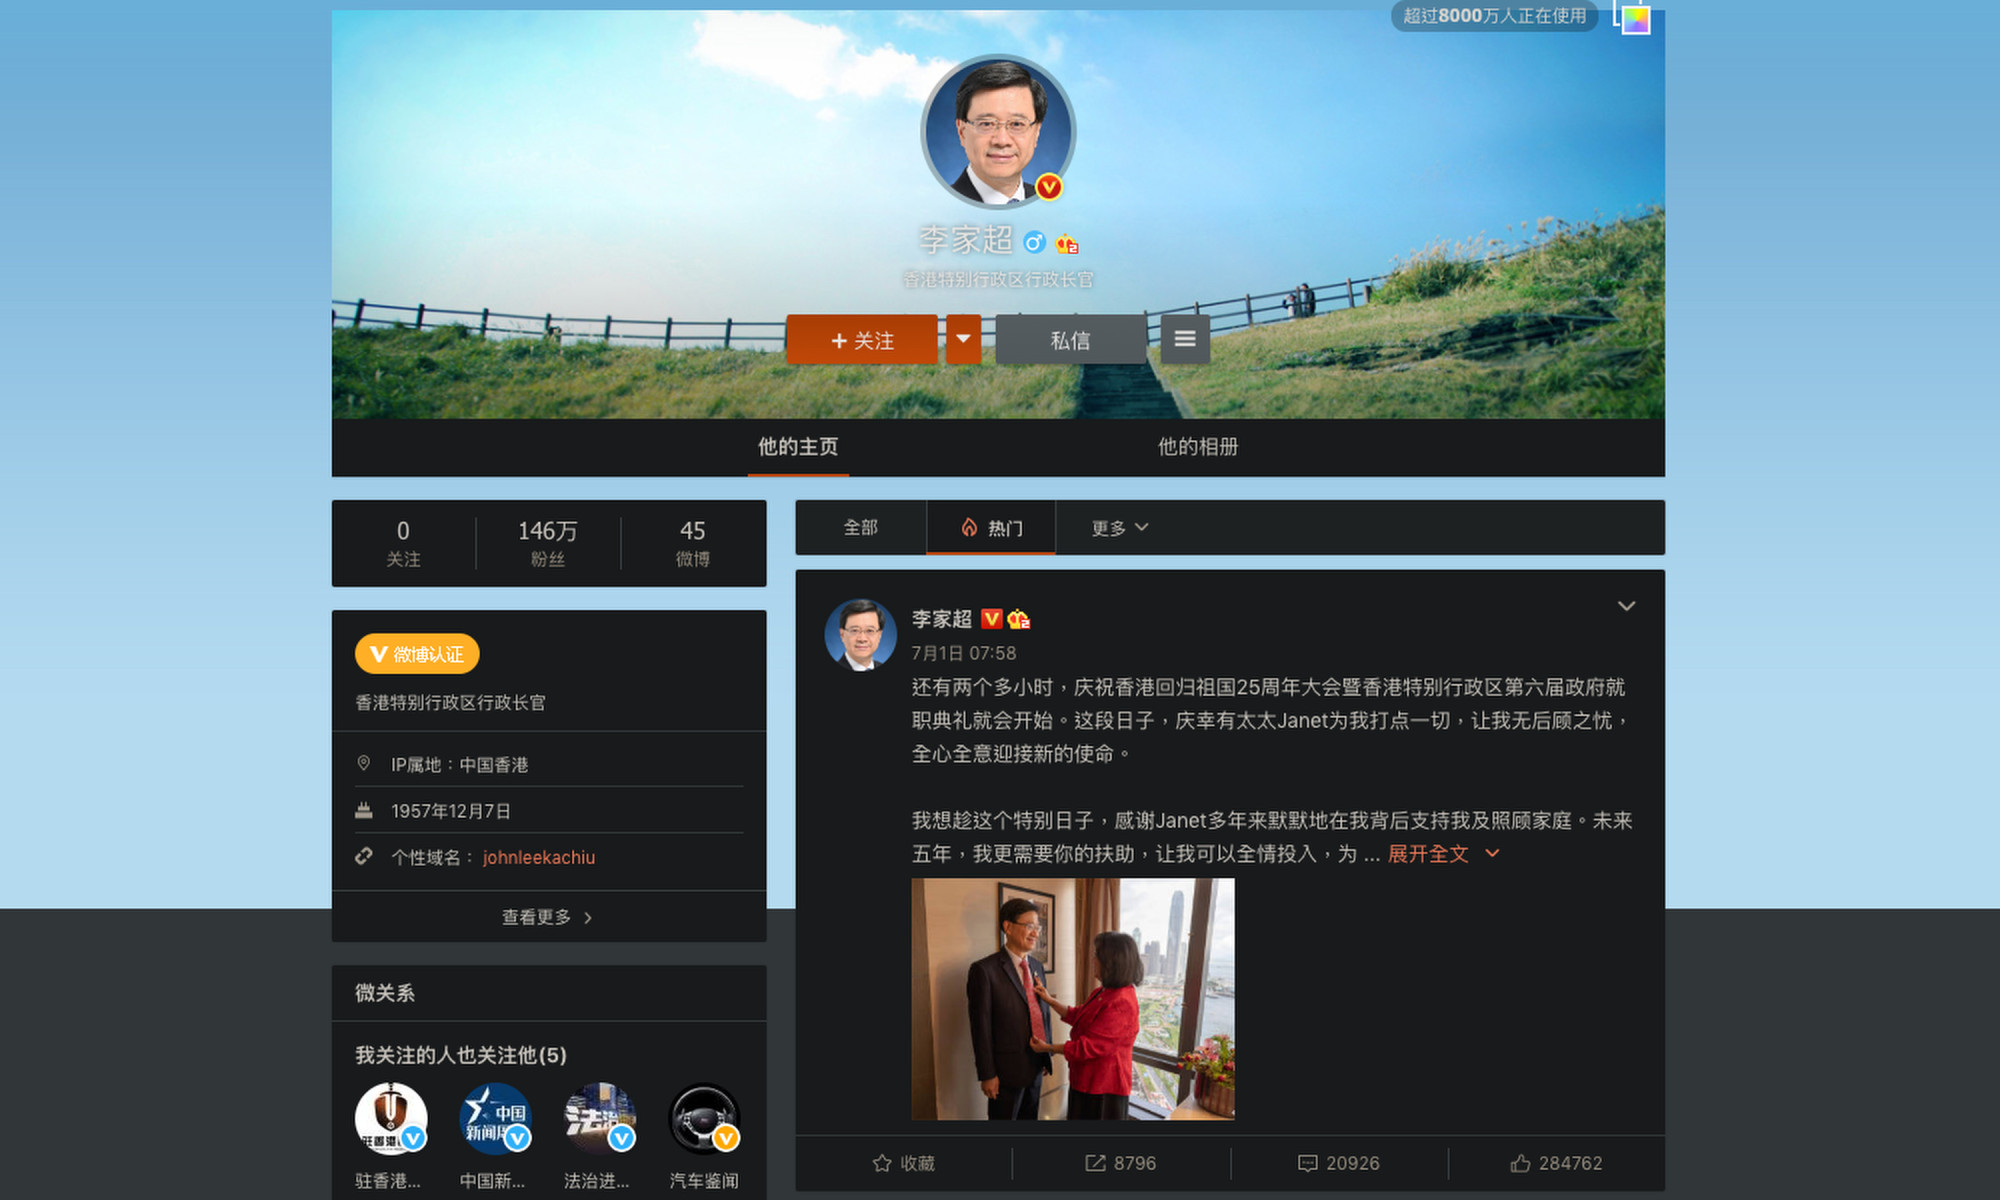 John Lee has amassed 1.46 million Weibo followers in just six weeks since taking office on July 1. Photo: Weibo